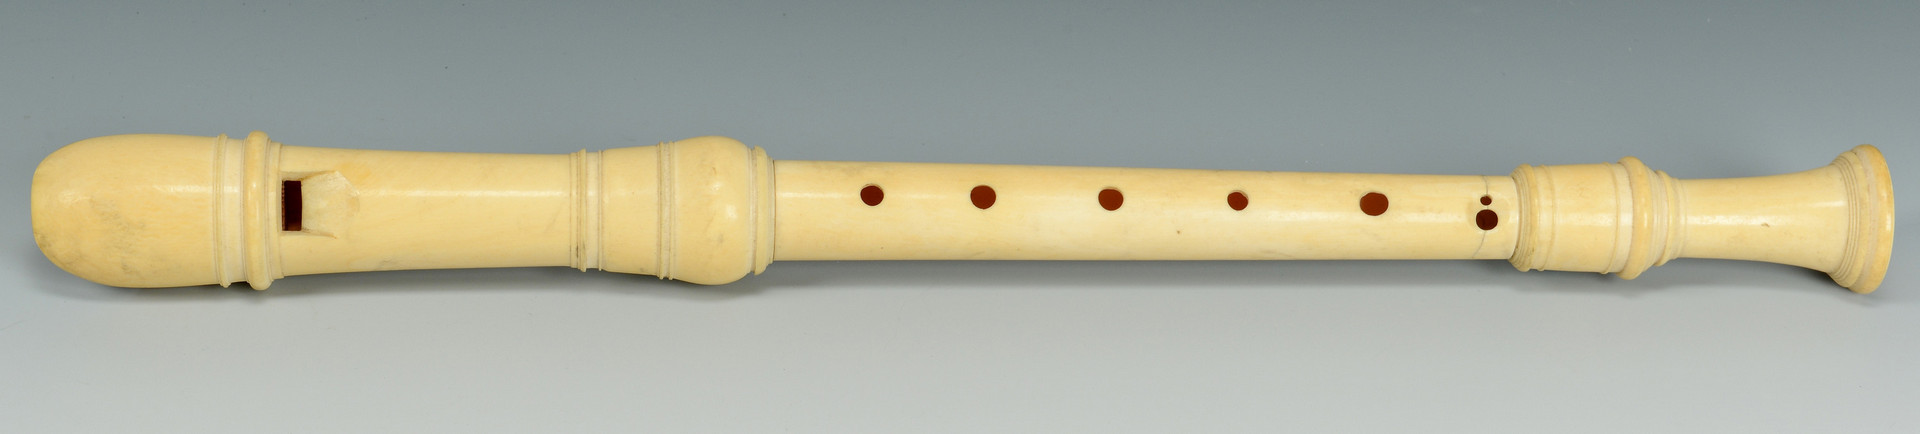 Lot 487: 5 Decorative Ivory Items